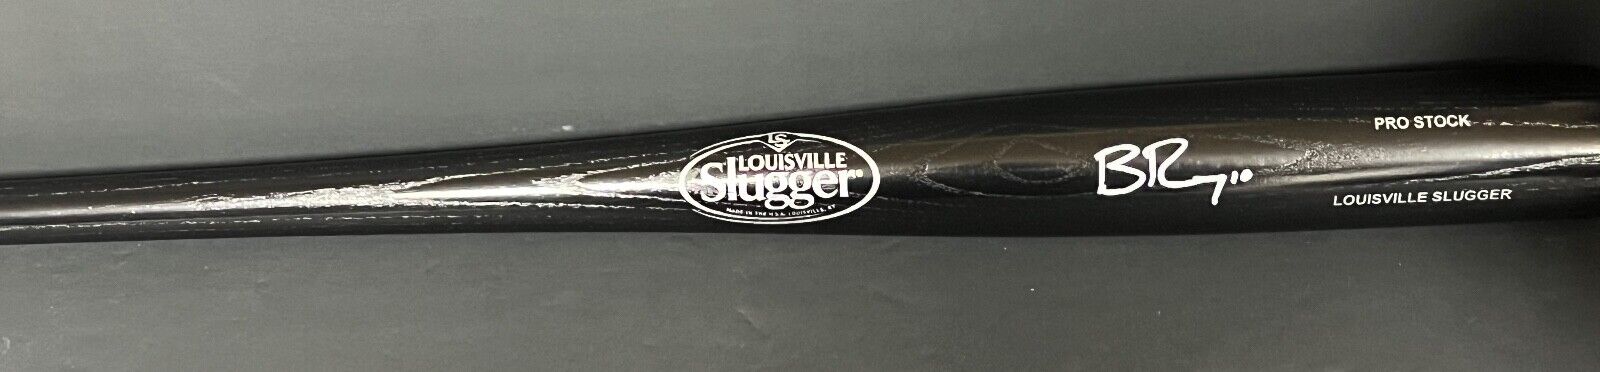 Bryan Reynolds Pirates Auto Signed Black Louisville Slugger Bat Full Size